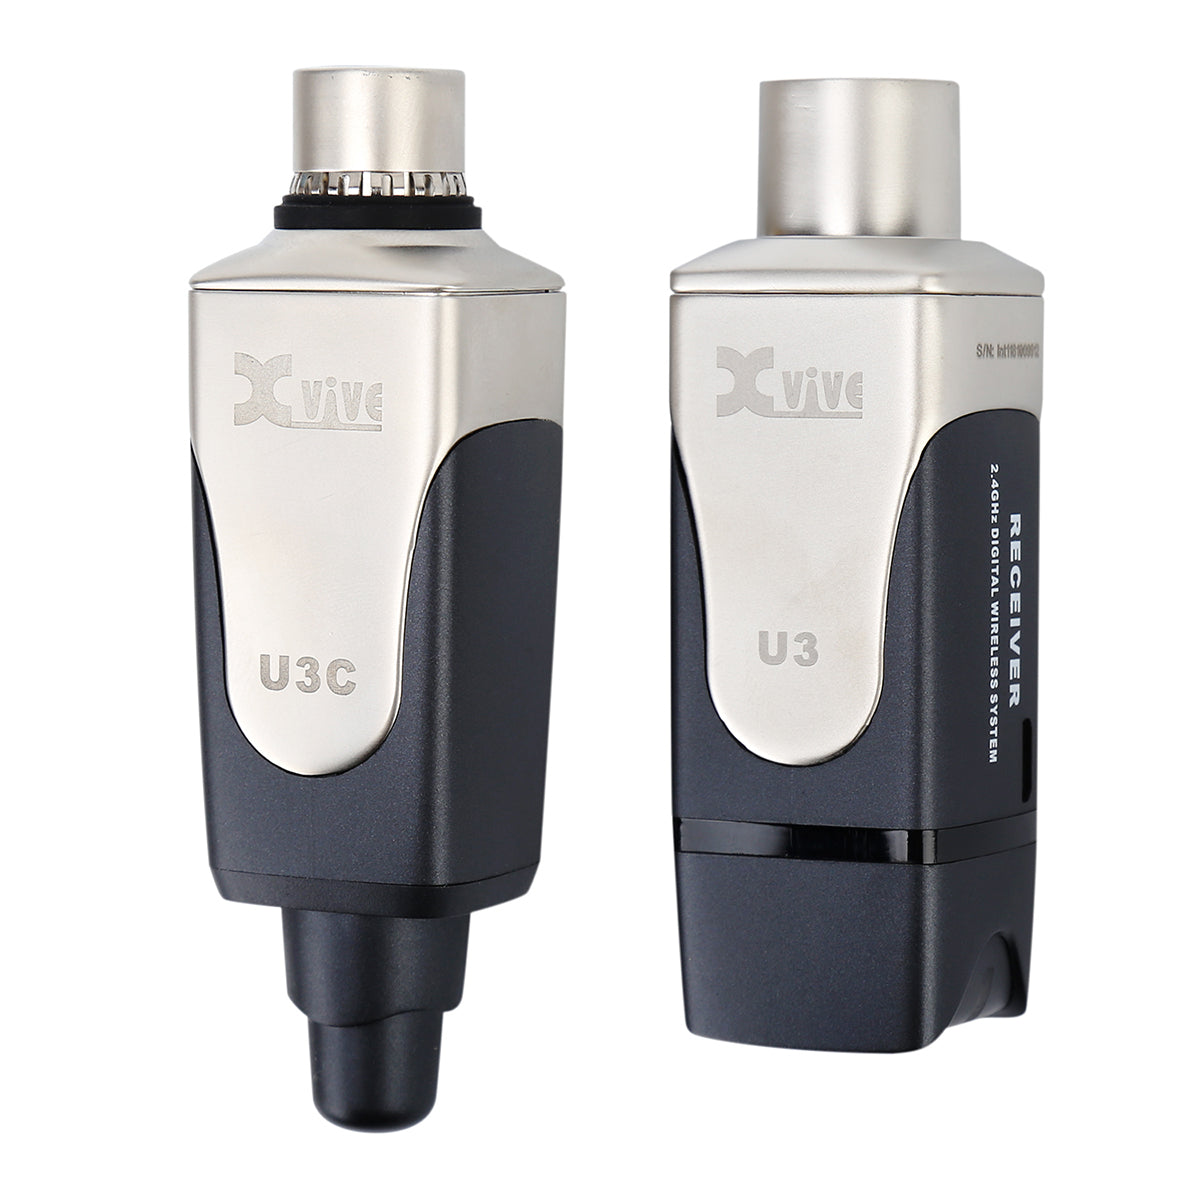 Xvive Condenser Microphone Wireless System